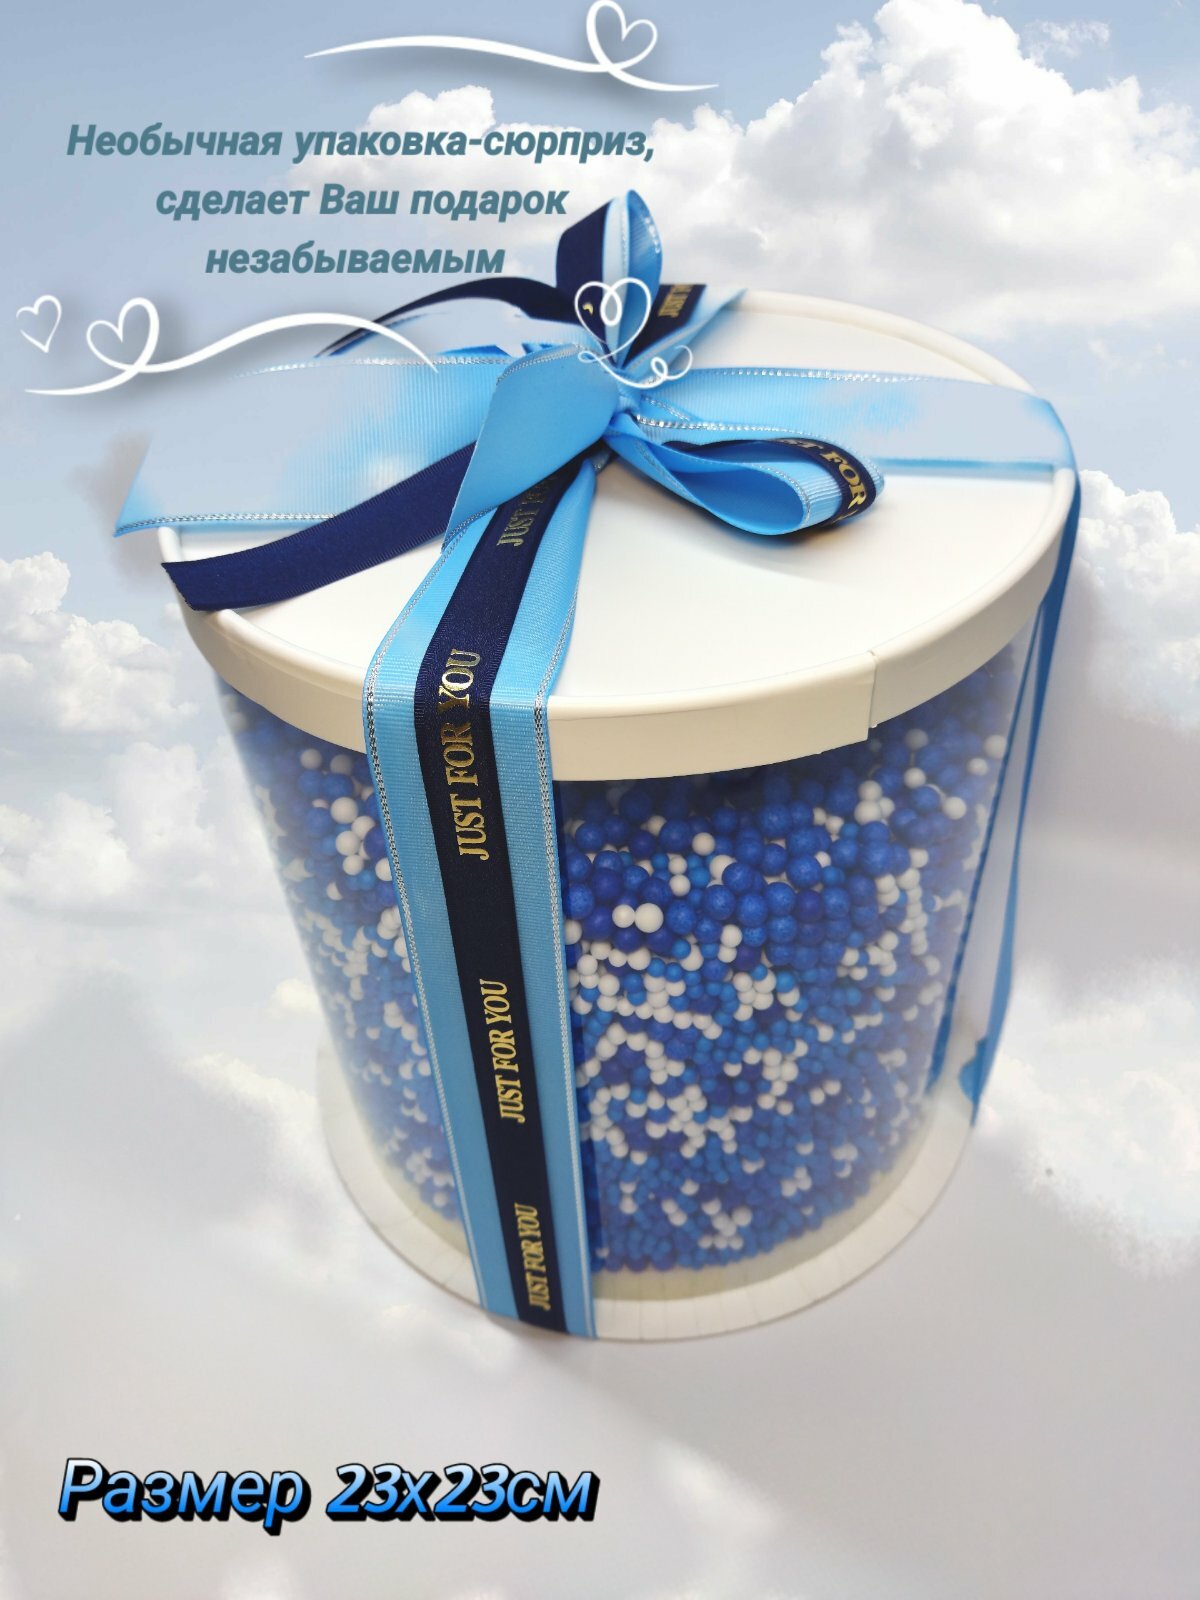 Коробка для подарка с шариками упаковка для подарка - сюрприз бело-синяя